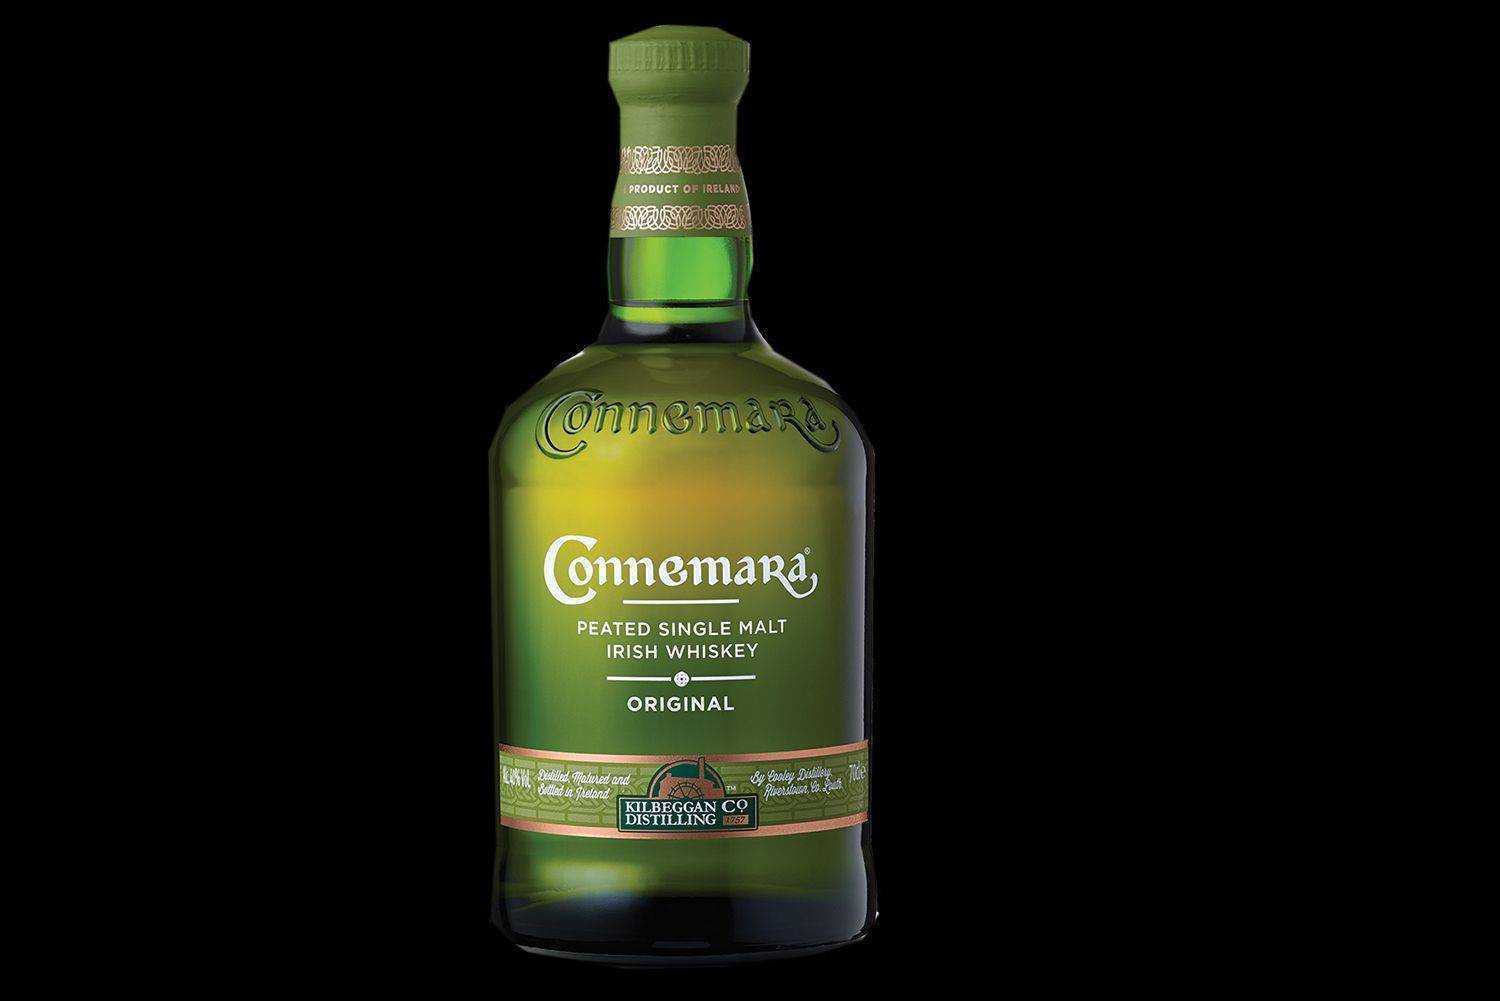 Виски «connemara» peated single malt, gift box, 0.7 л — «коннемара» ориджнл (питид сингл молт), в подарочной коробке, 700 мл